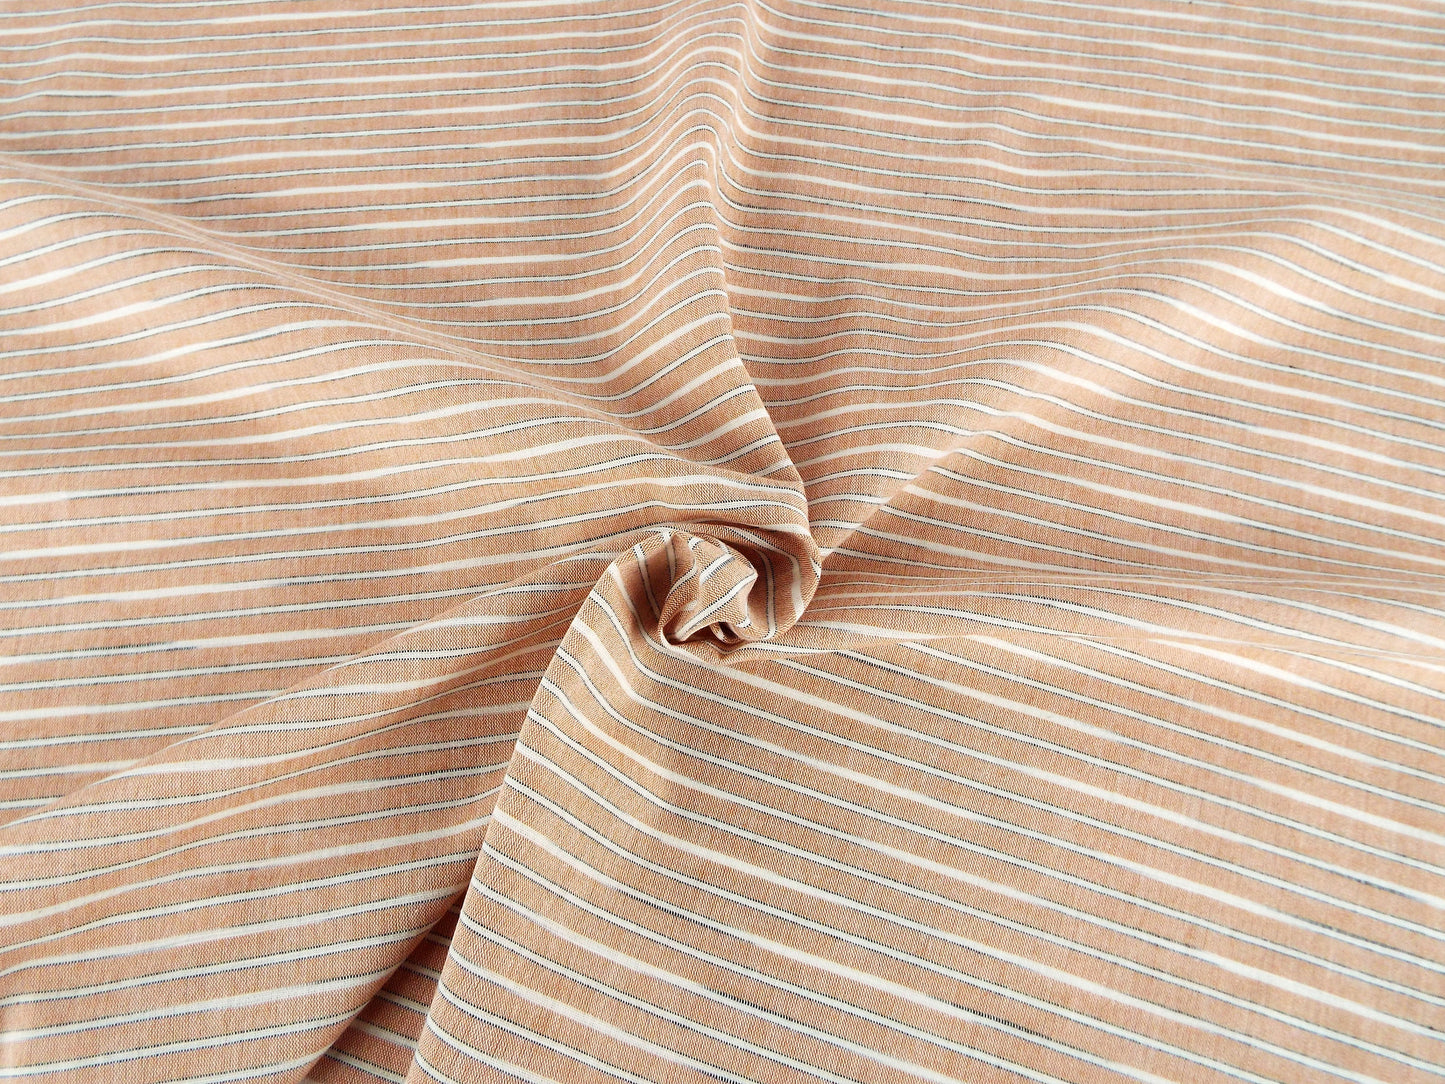 Kameda striped cotton fabric thin fabric # 108 ABC 3 patterns